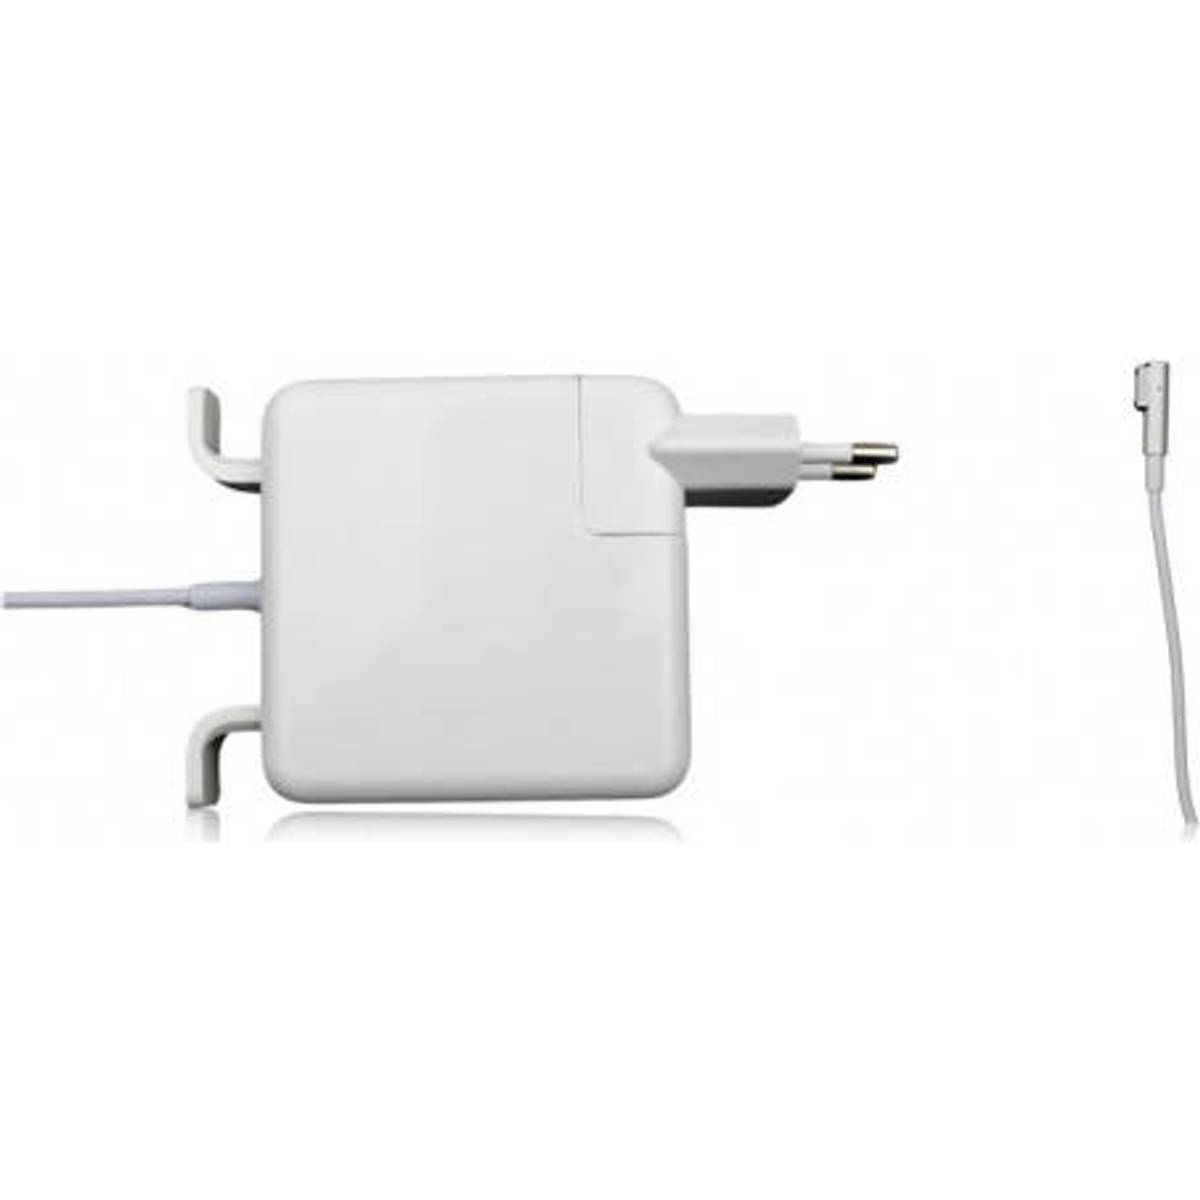 Macbook air oplader • Find den billigste pris hos PriceRunner nu »